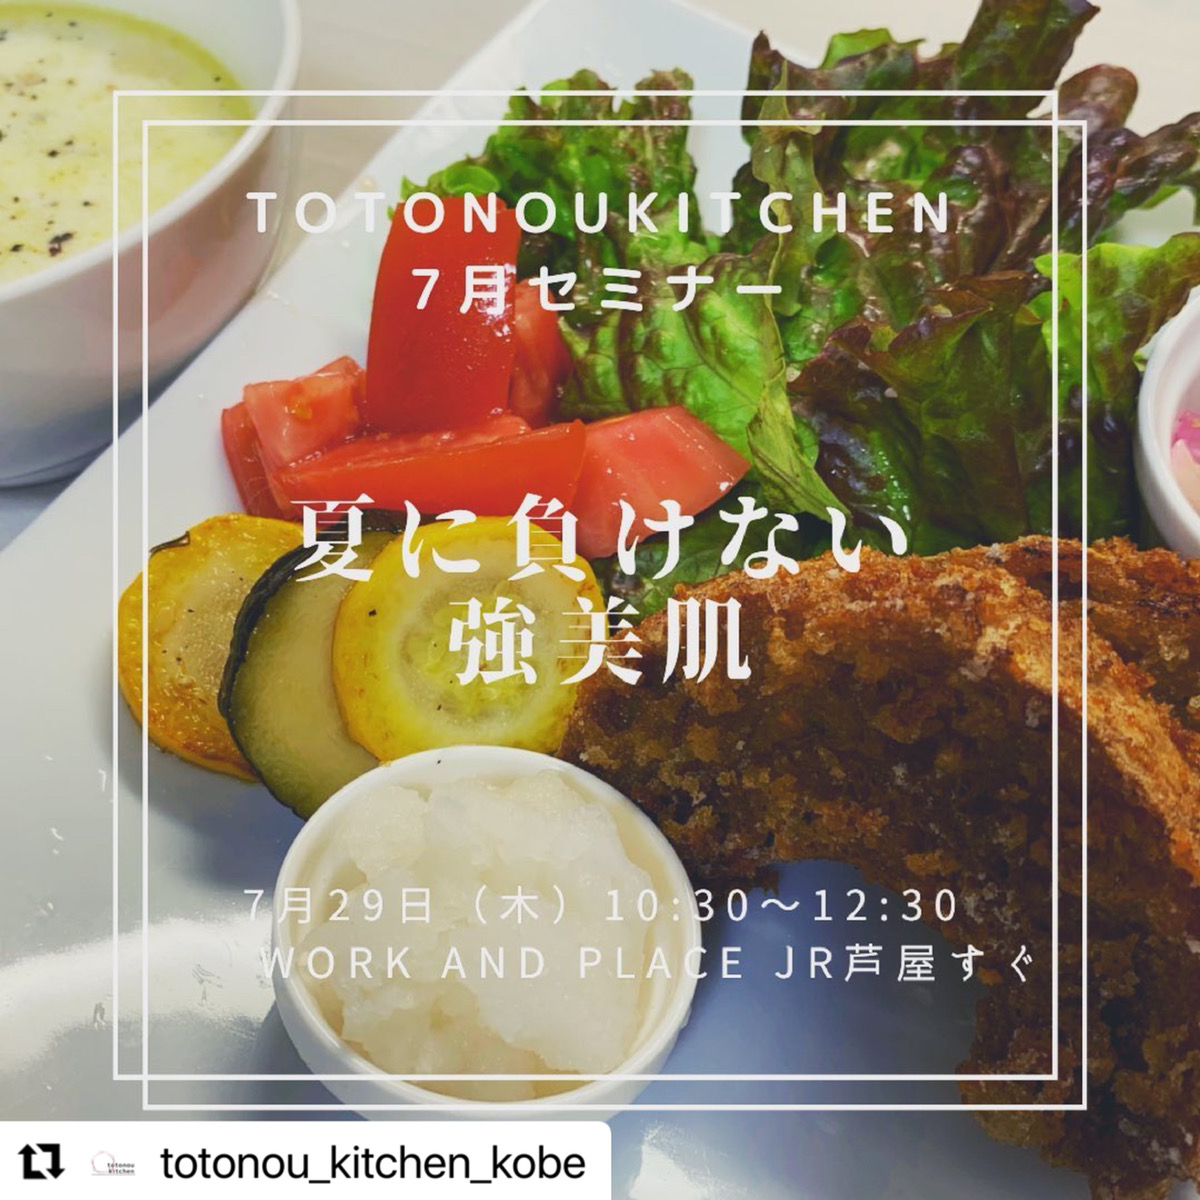 totonoukitchen 7 月セミナー「食で強美肌作り」の写真